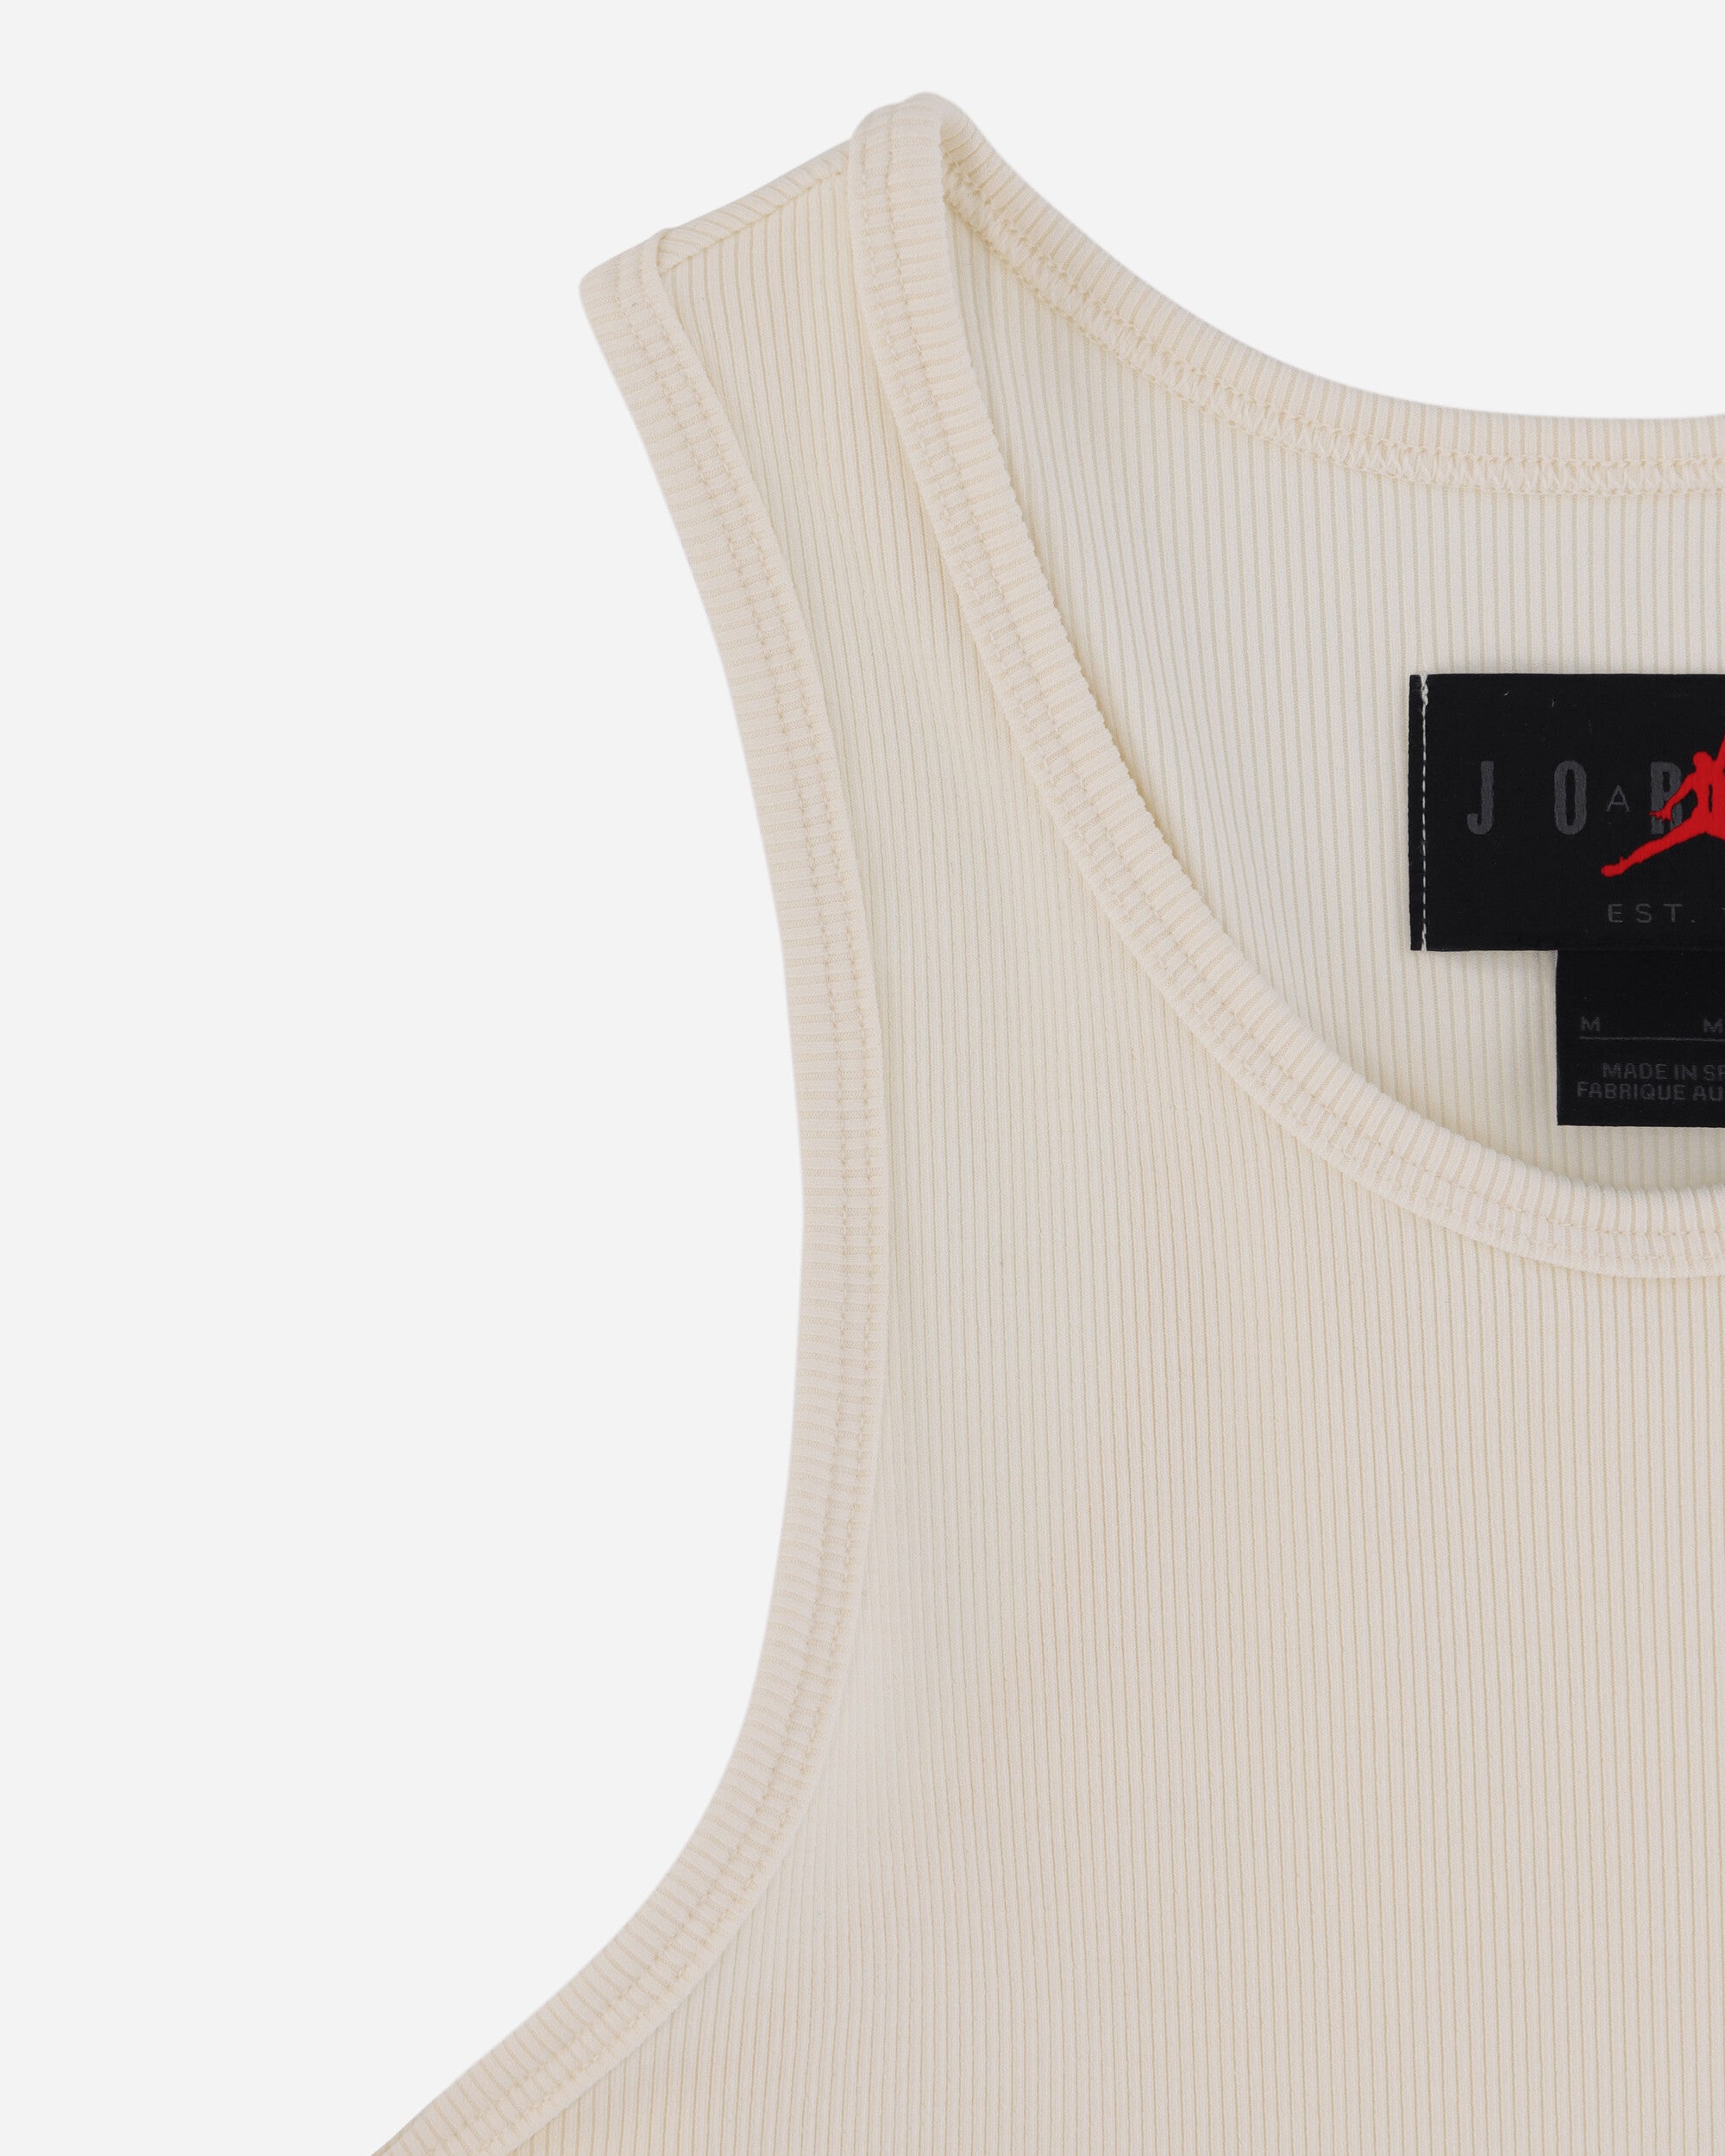 Nike Jordan Wmns Sp Tt Tank Coconut Milk/Gym Red T-Shirts Shortsleeve FB2629-113